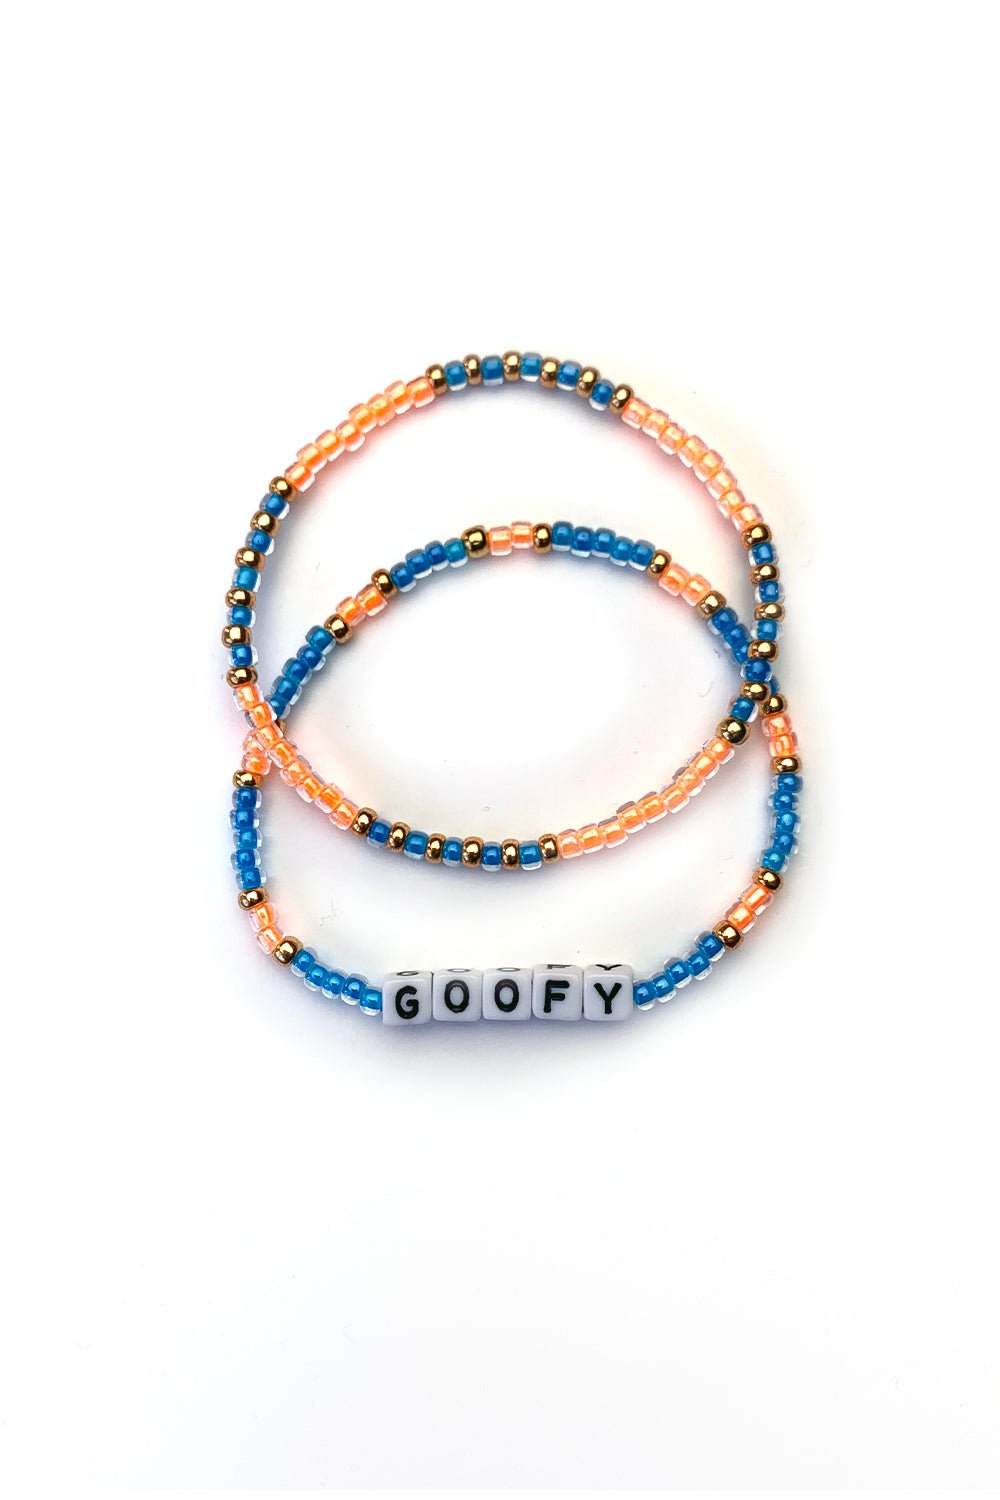 Sarah Marie Design Studio Bracelet Goofy's Disney Inspired Bracelet